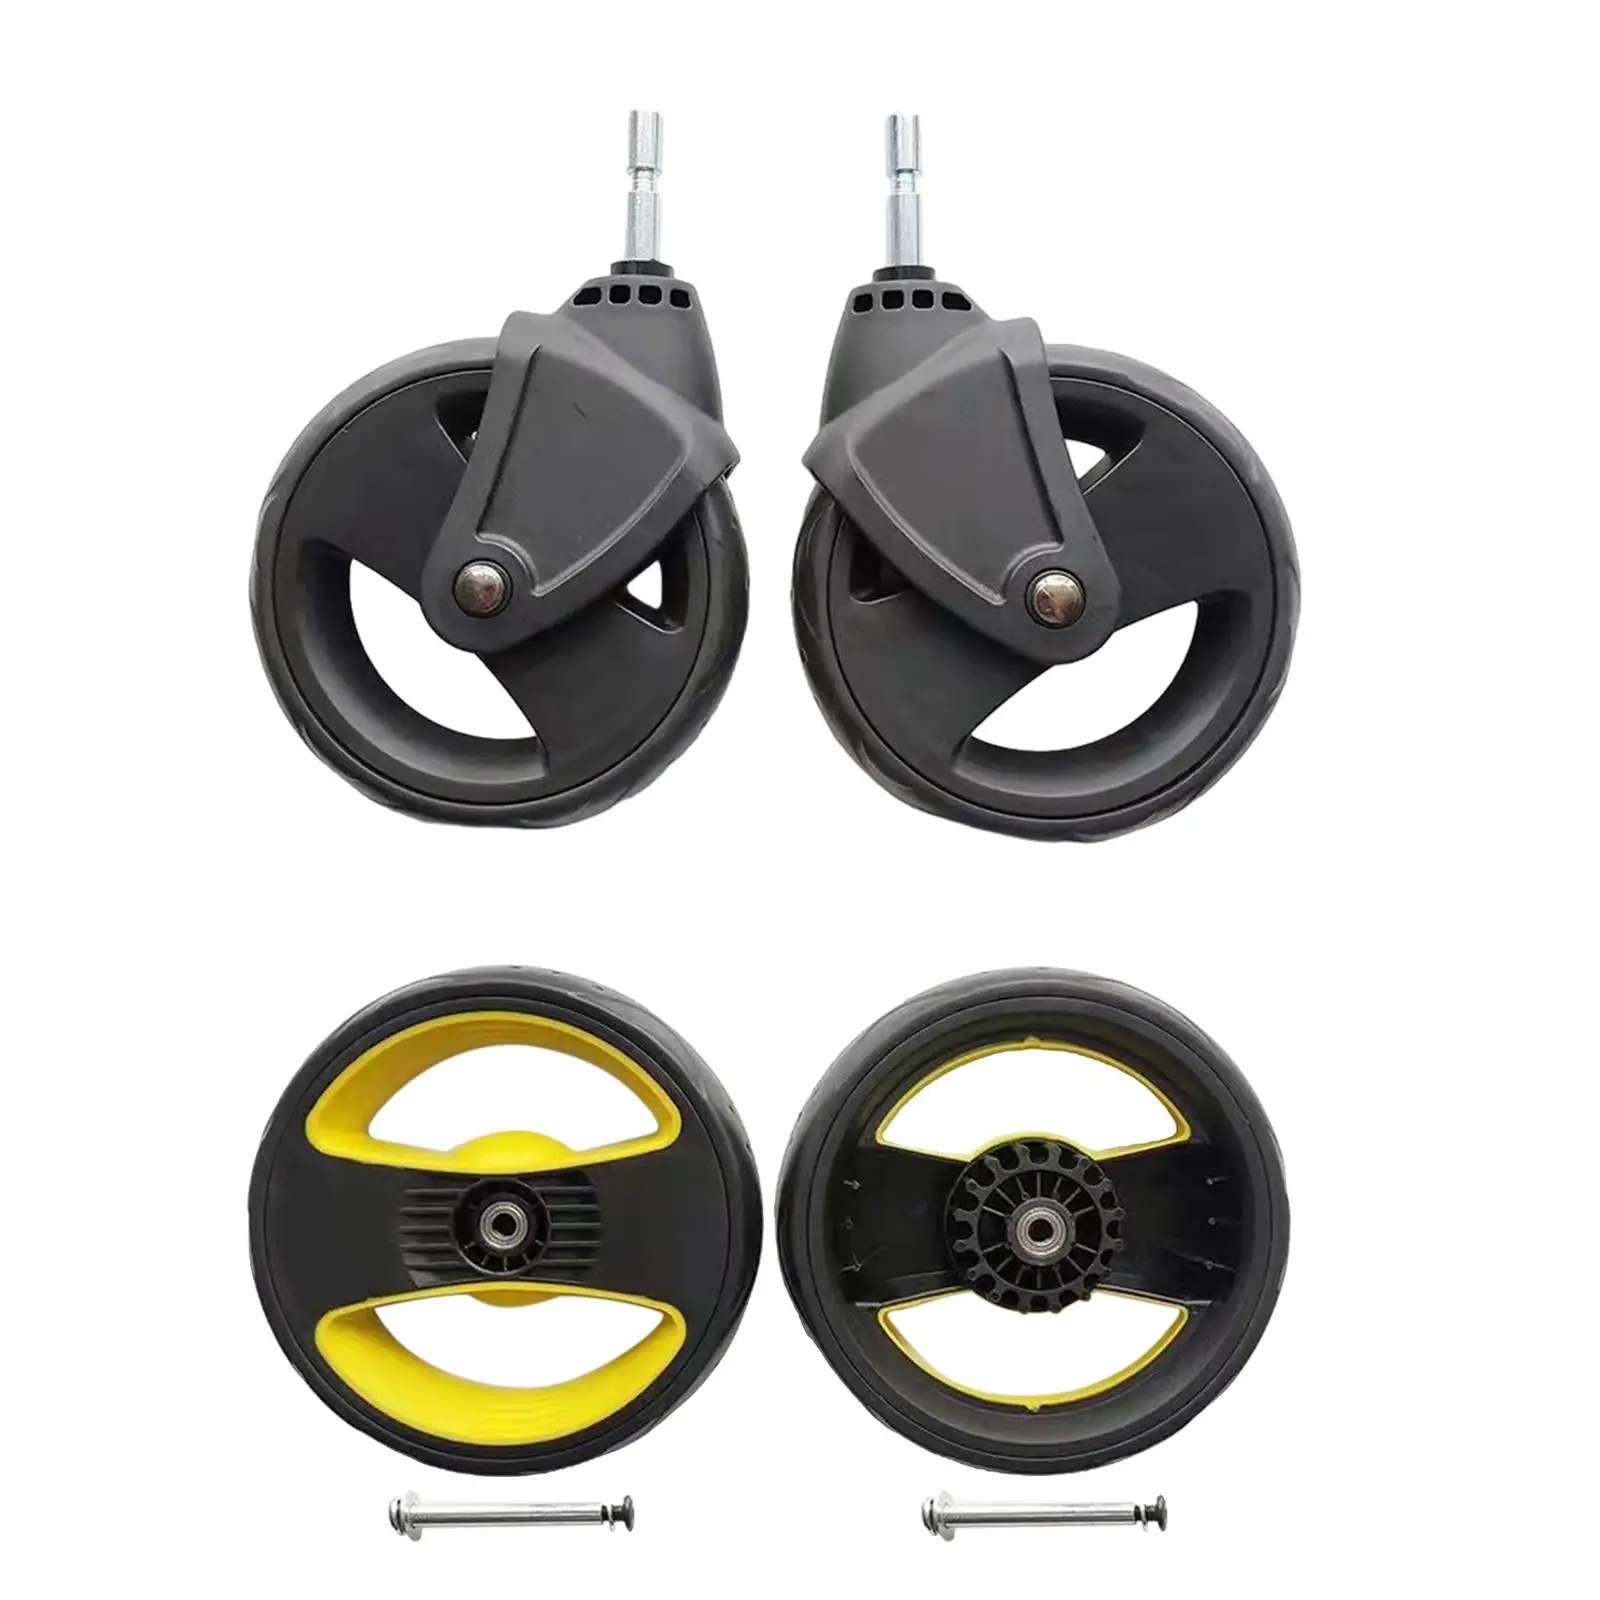 2x Pushchair Spare Parts Accessories Universal Pram Tire Wheel Replacement Swivel Wheel Rubber Trolley Wheel Trolley Wheel Set